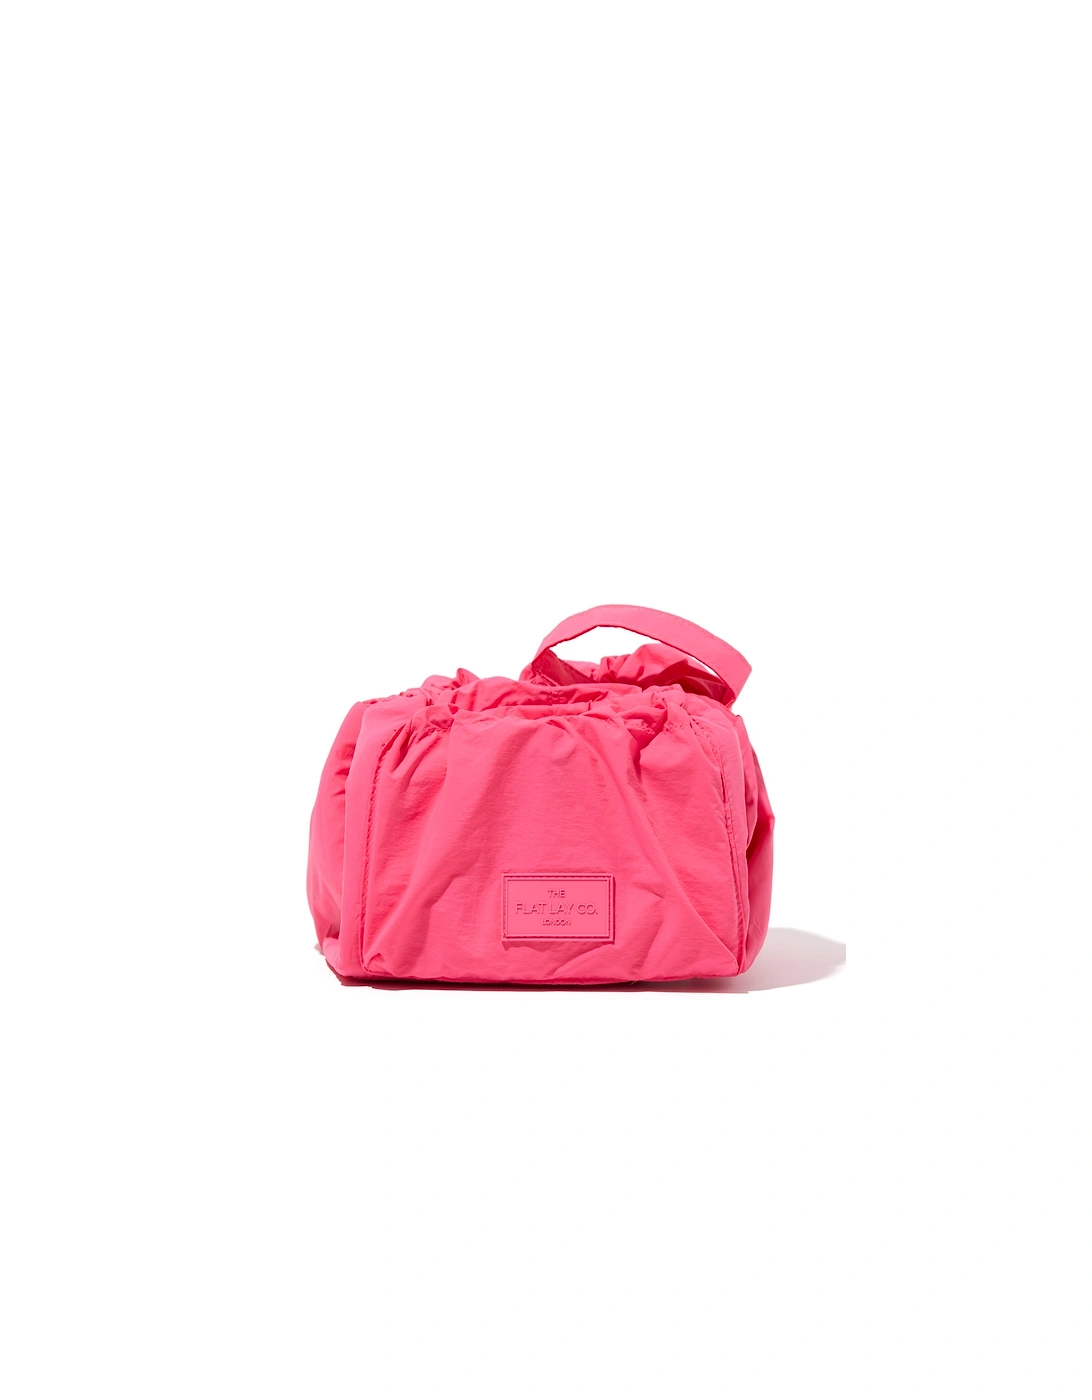 The Flat Lay Co. Drawstring Makeup Bag - Pink Parachute, 2 of 1